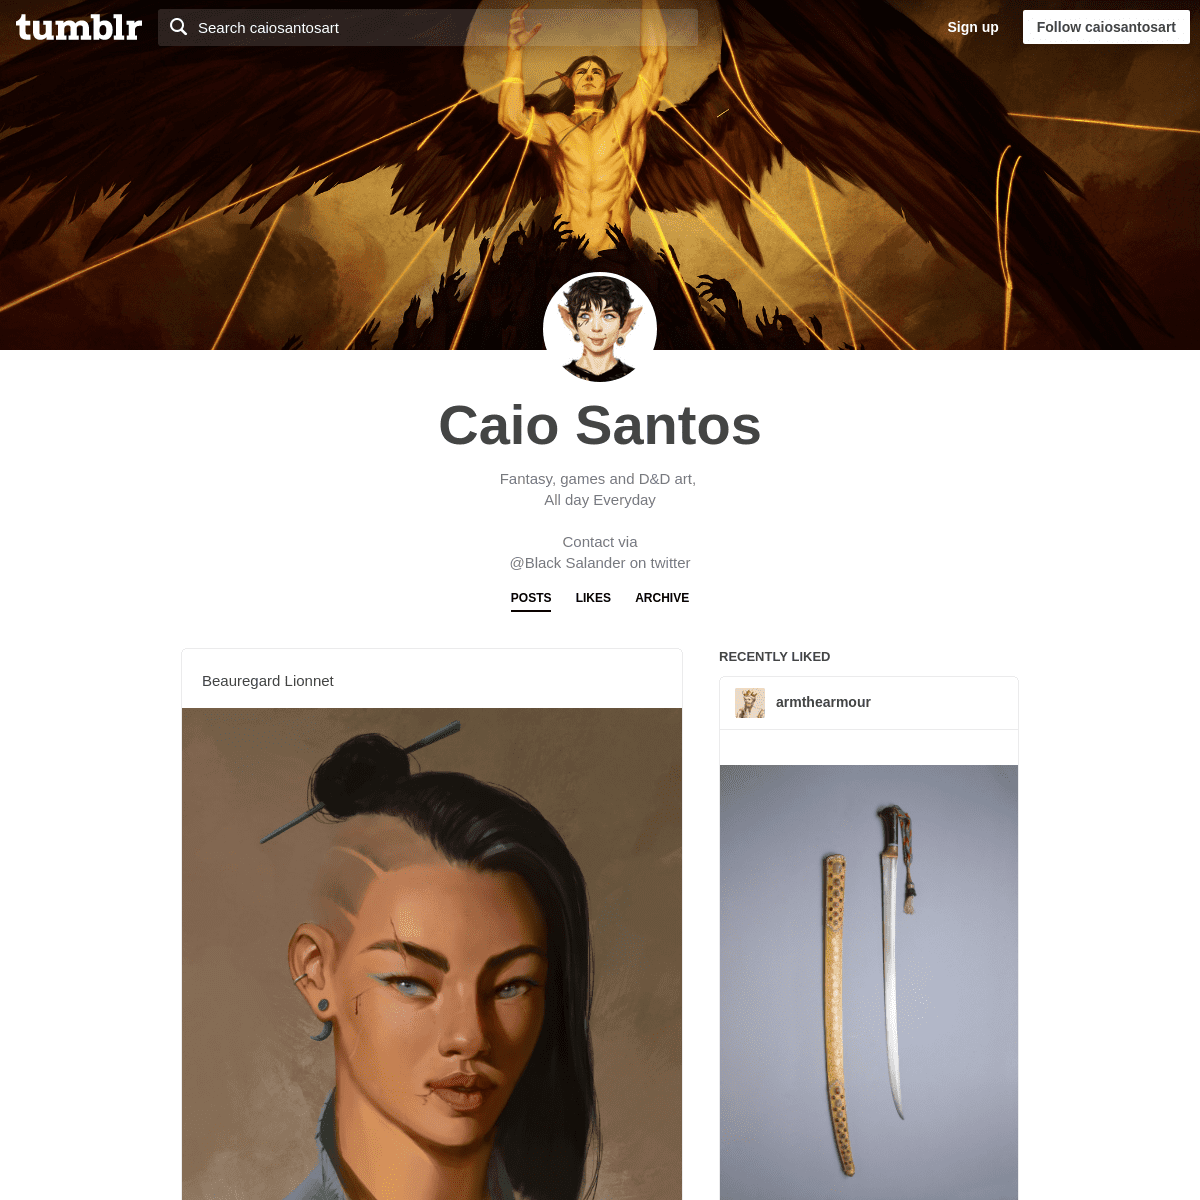 Caio Santos